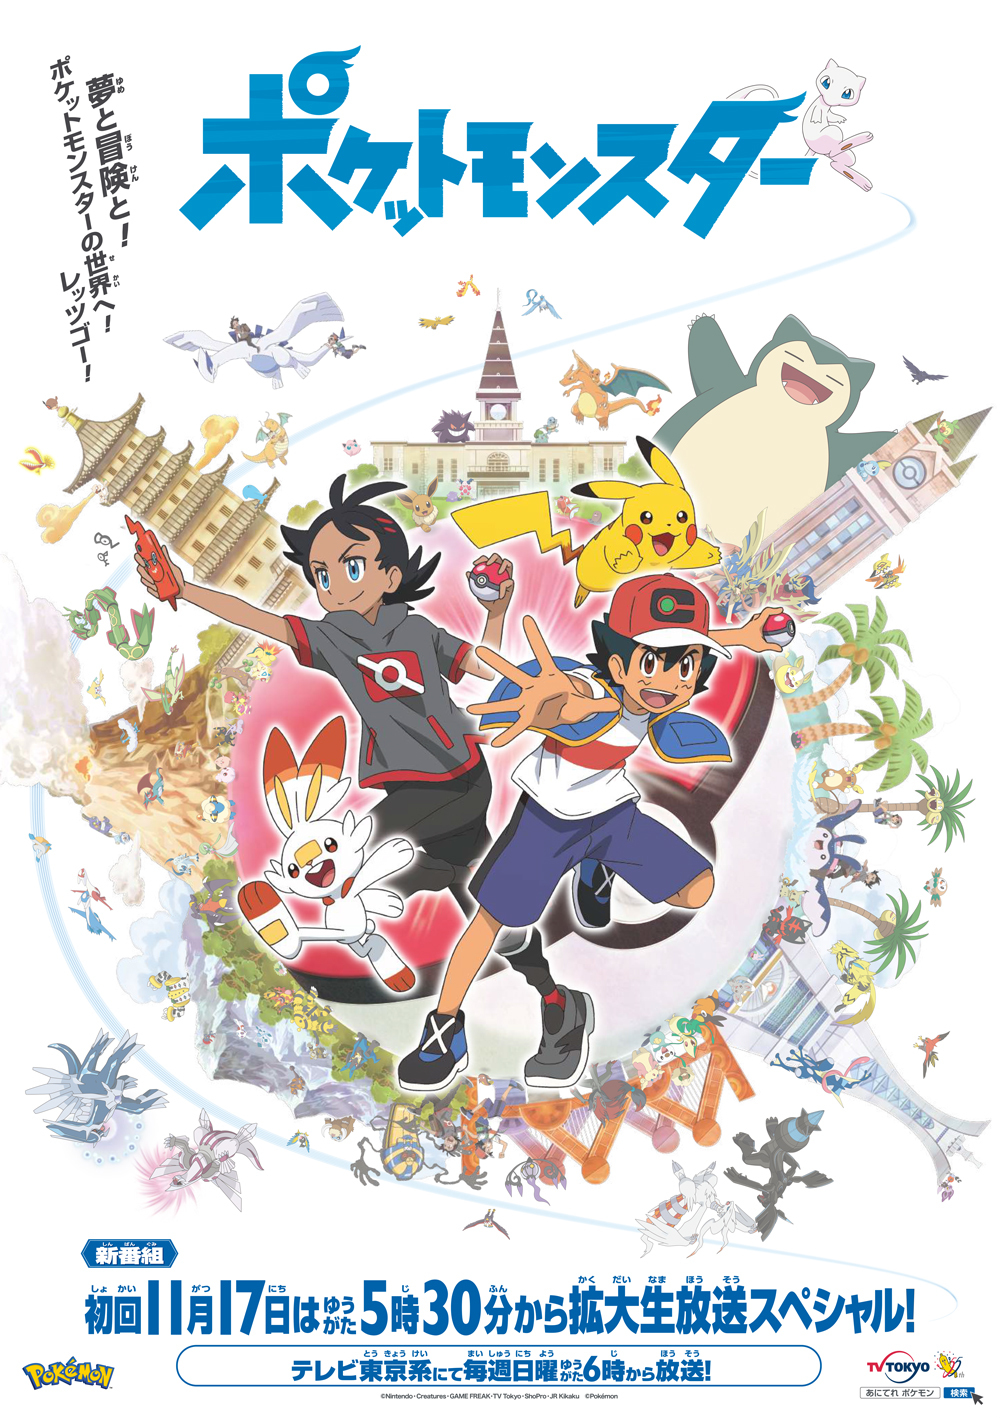 TVアニメ『ポケットモンスター』新シリーズ (C)Nintendo・Creatures・GAME FREAK・TV Tokyo・ShoPro・JR Kikaku (C)Pokémon